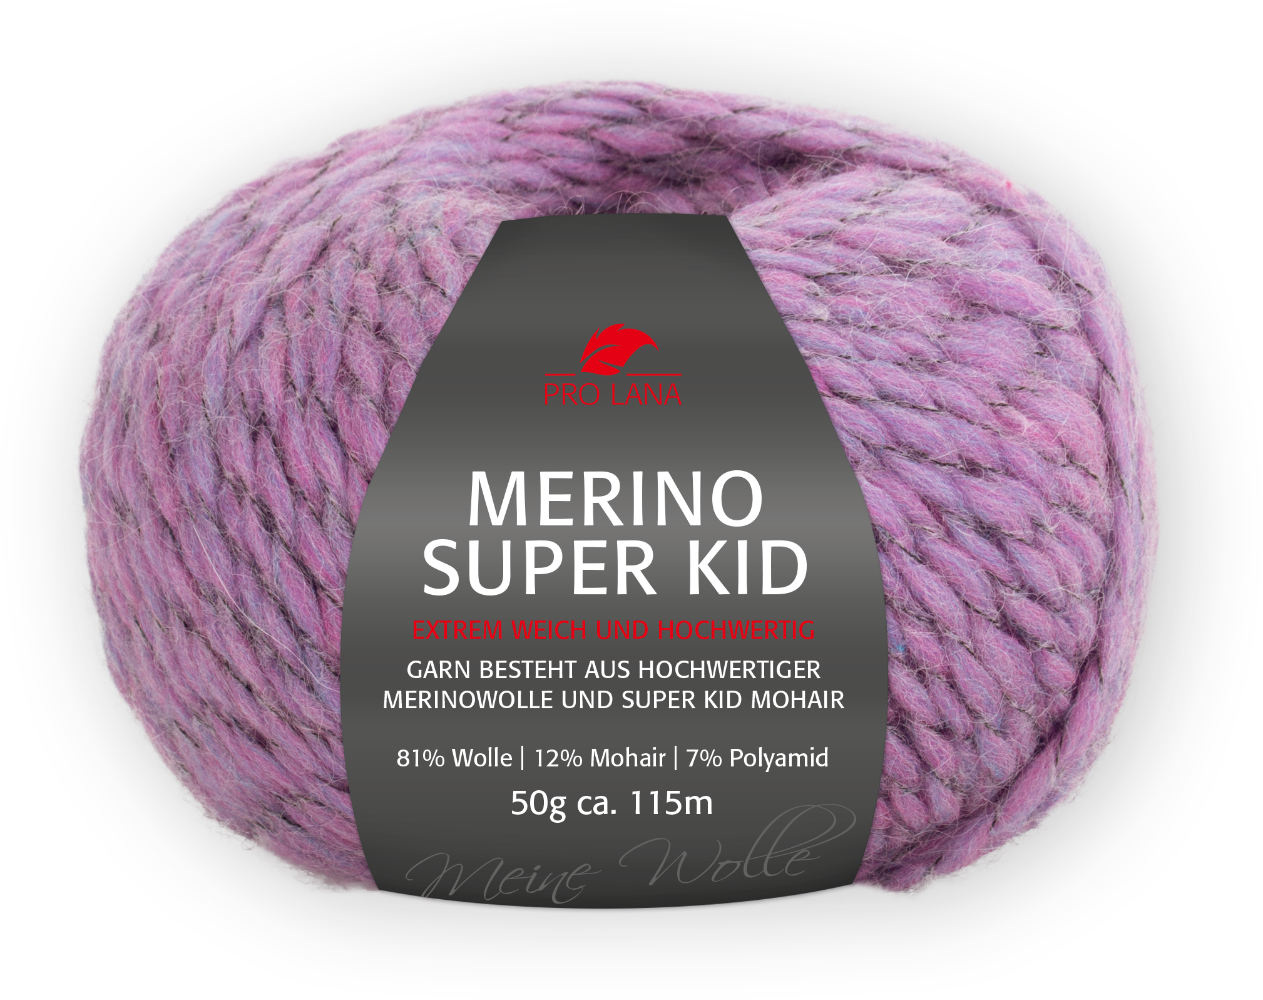 Merino Super Kid von Pro Lana 0142 - lila meliert